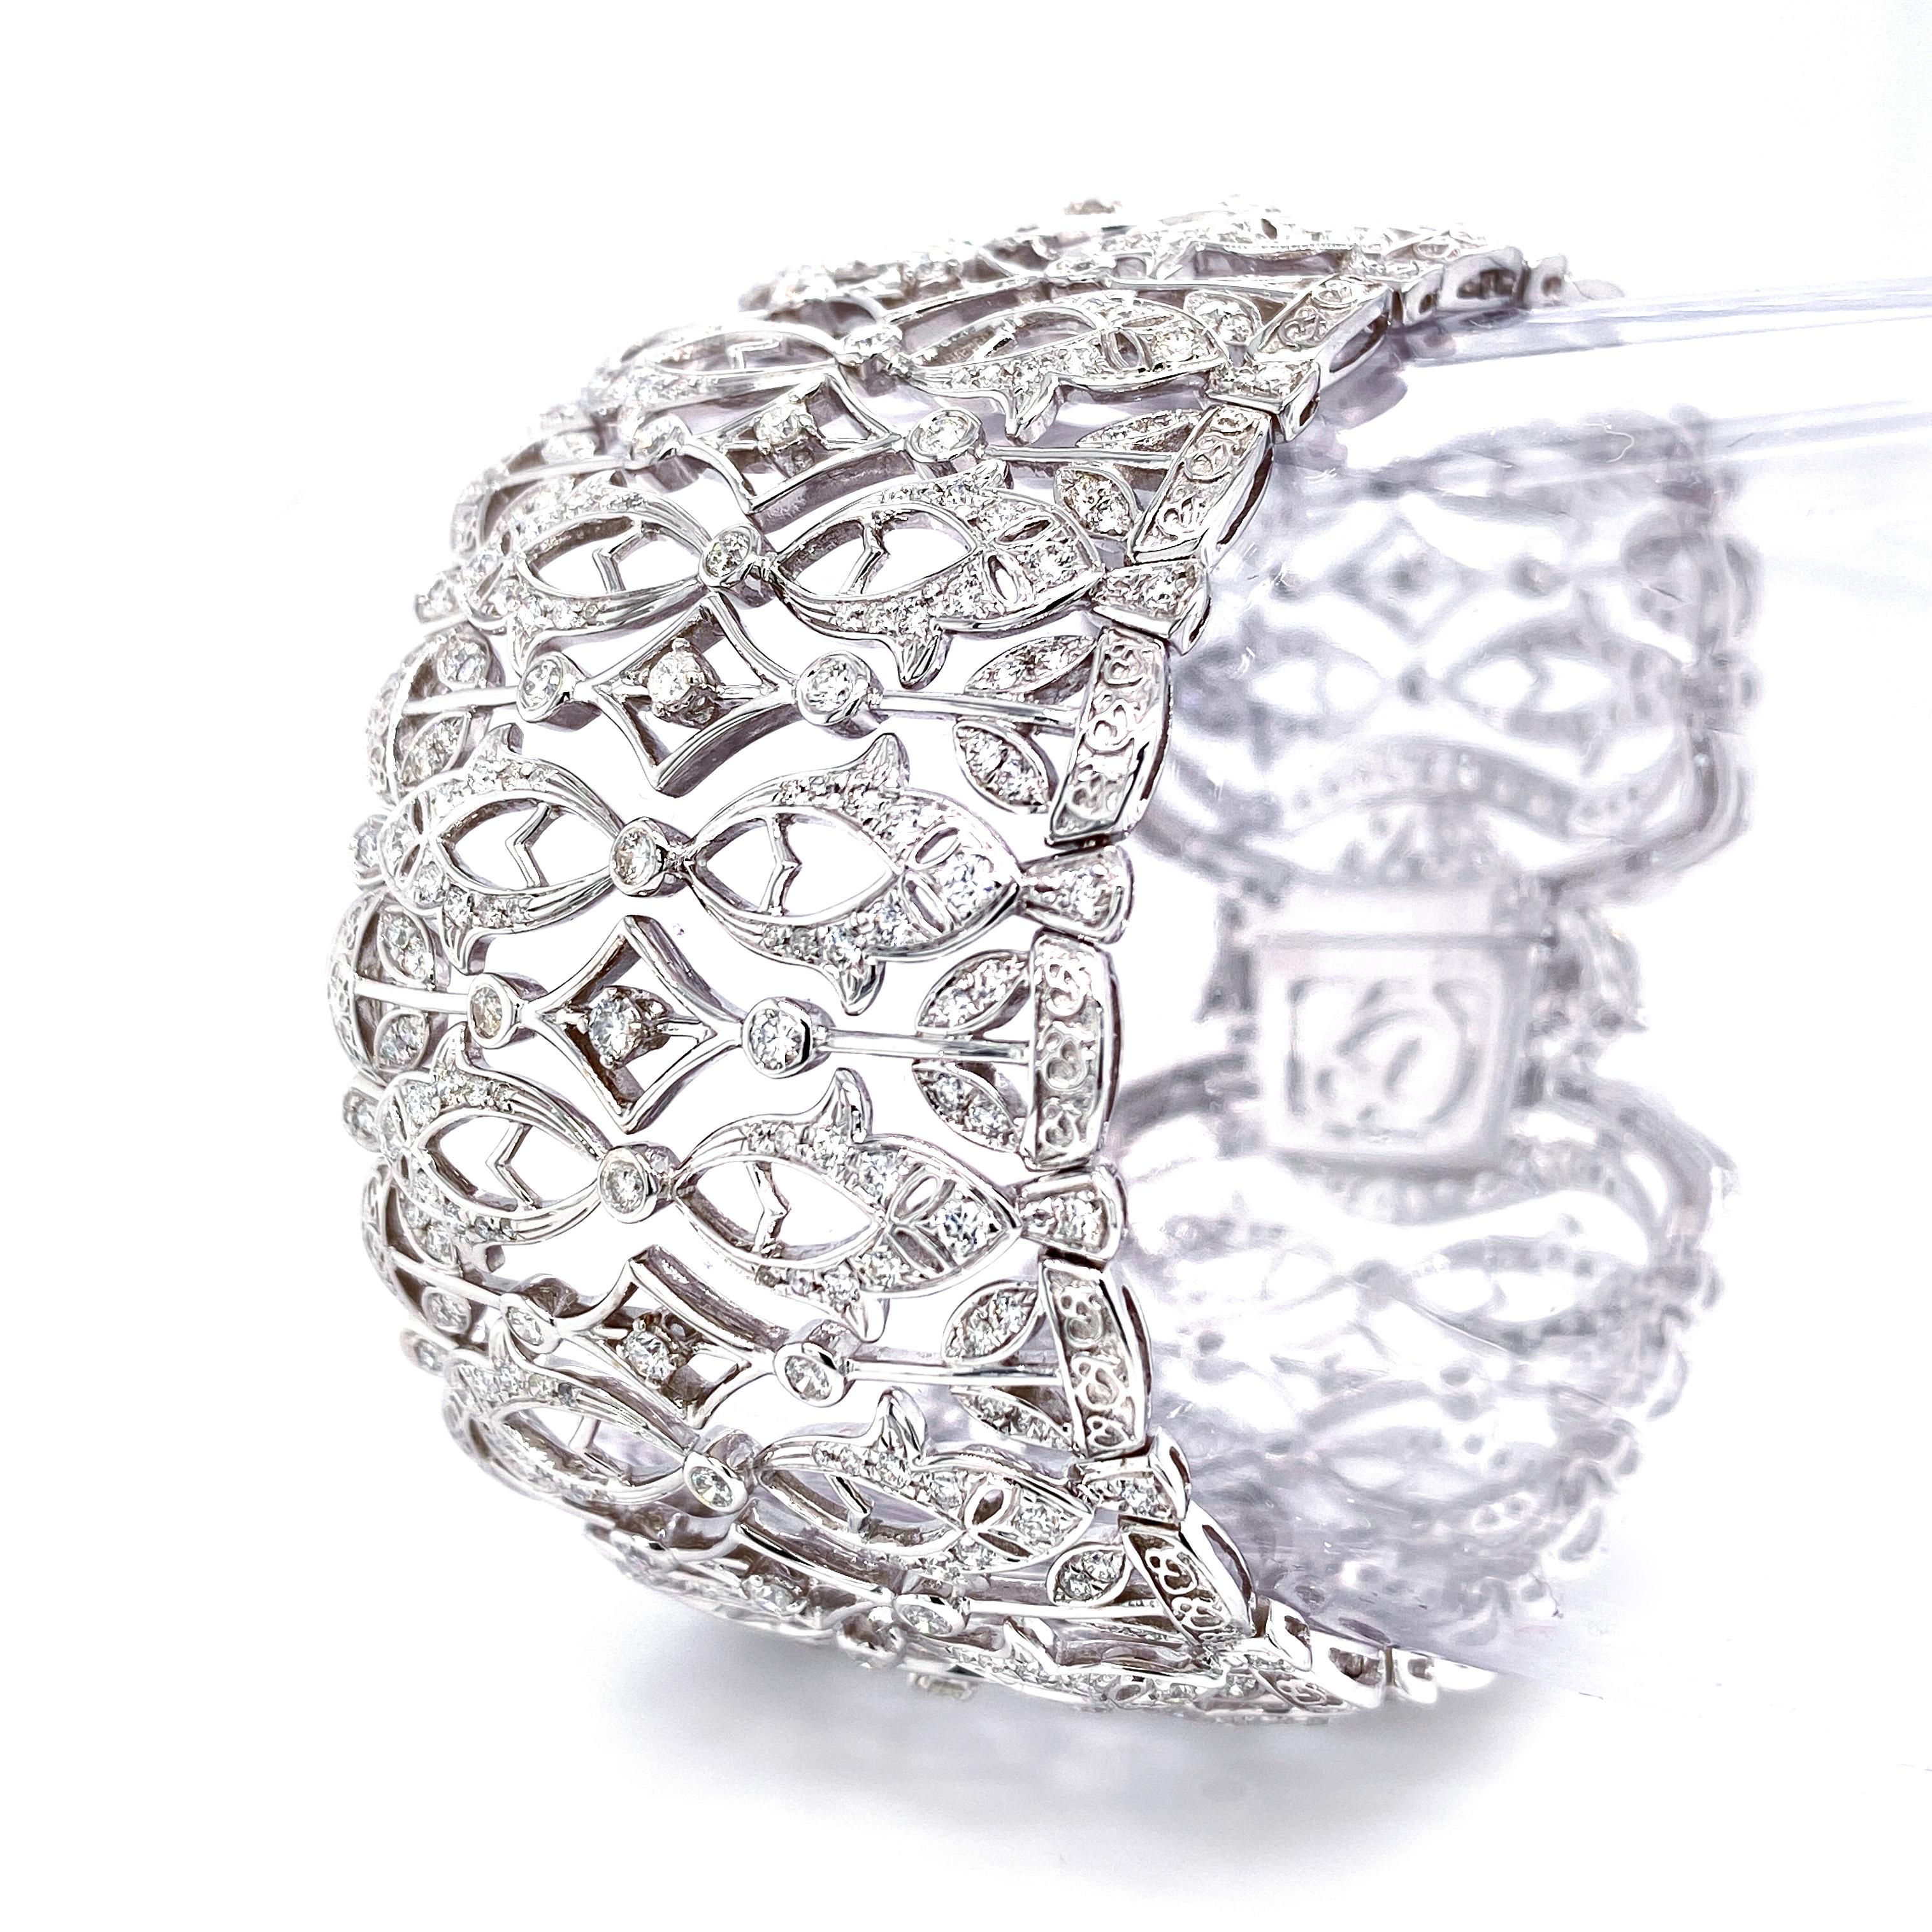 Belle Époque Lace Inspired Diamond Bangle Bracelet in 18 Karat White Gold For Sale